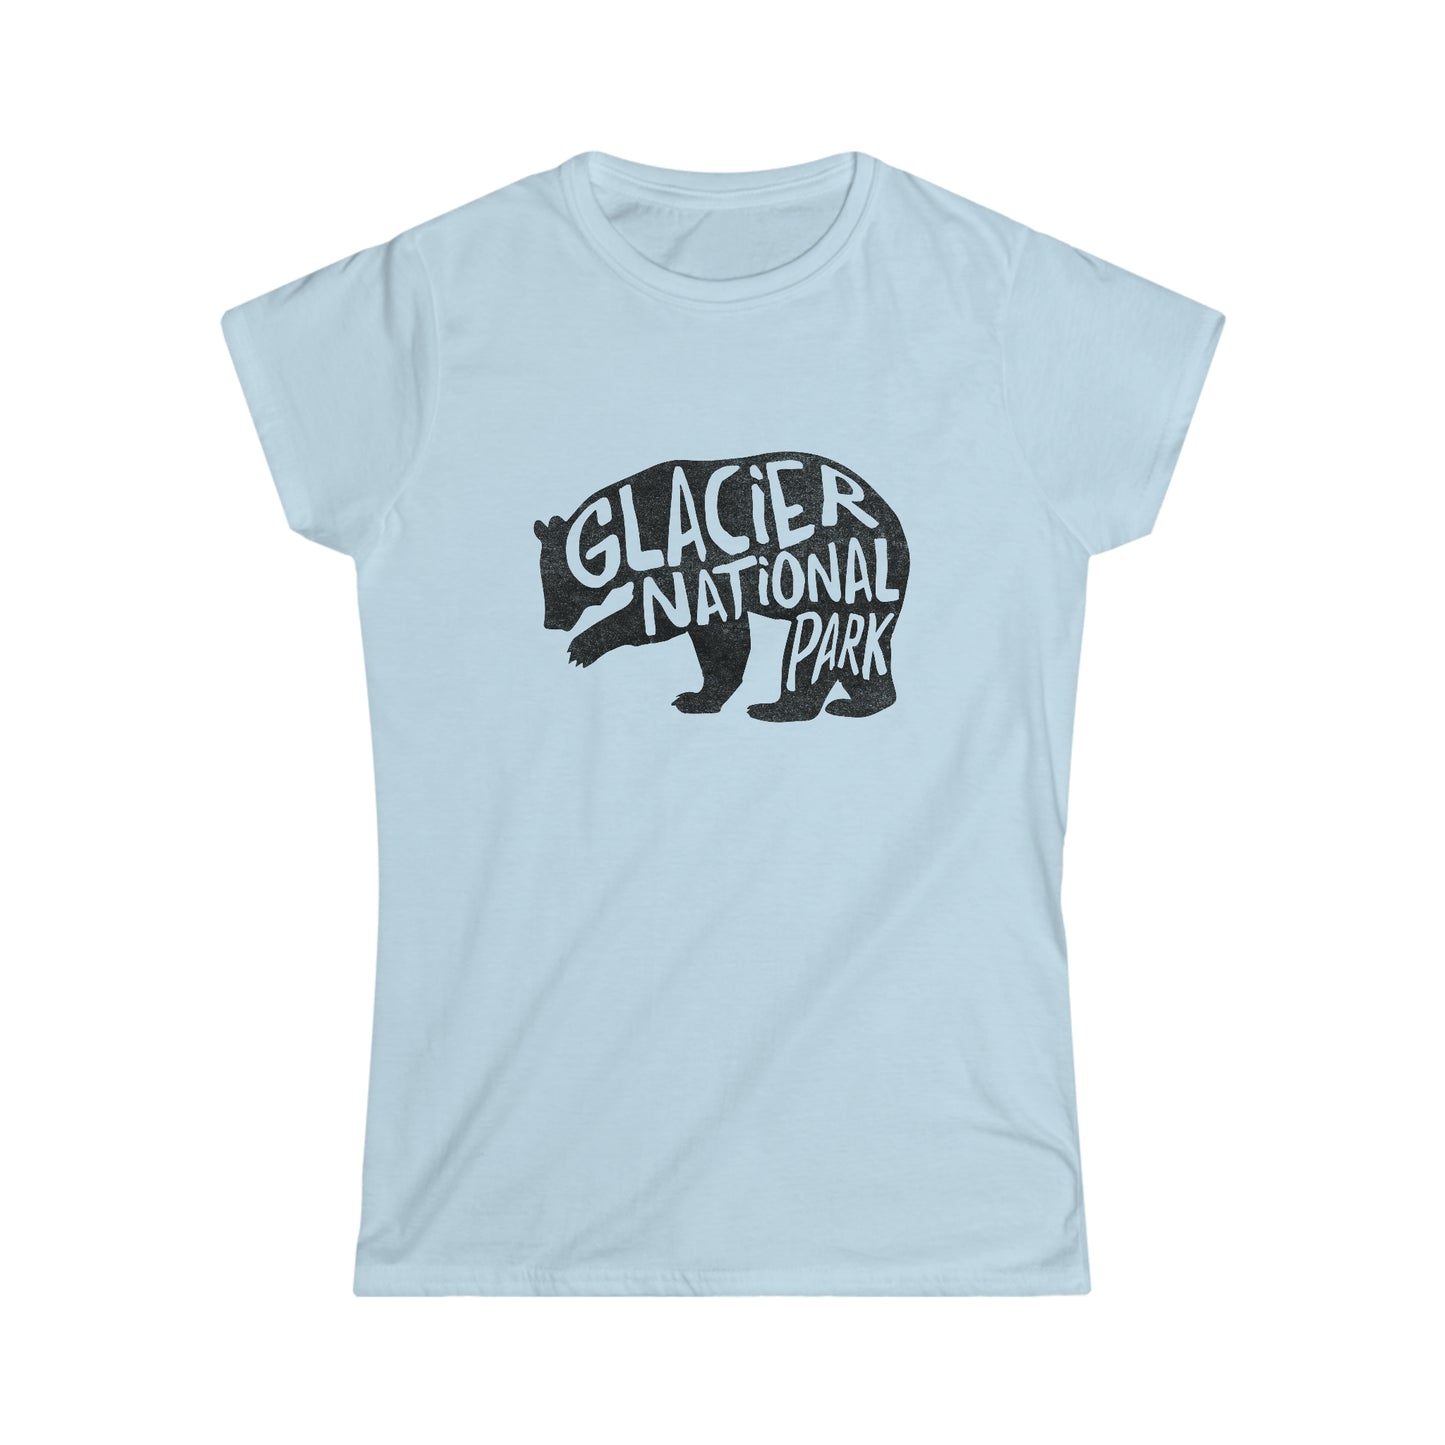 Glacier National Park Women's T-Shirt - Grizzly Bear